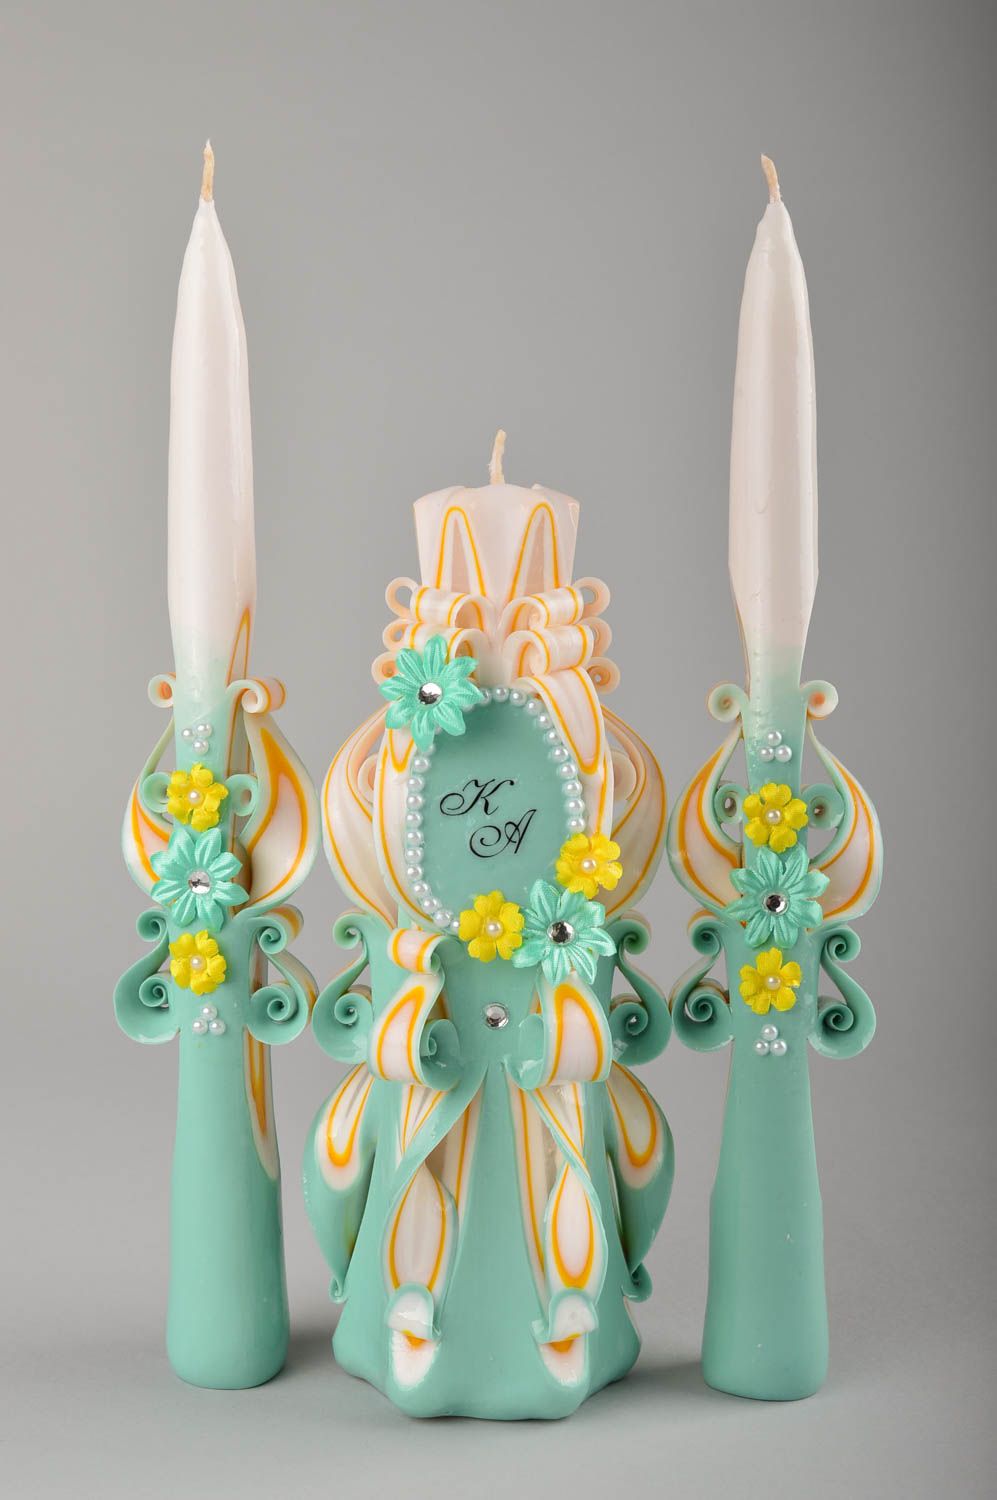 Handmade Kerzen Geschenk Hochzeit Accessoires Deko Kerzen geschnitzt schön foto 1